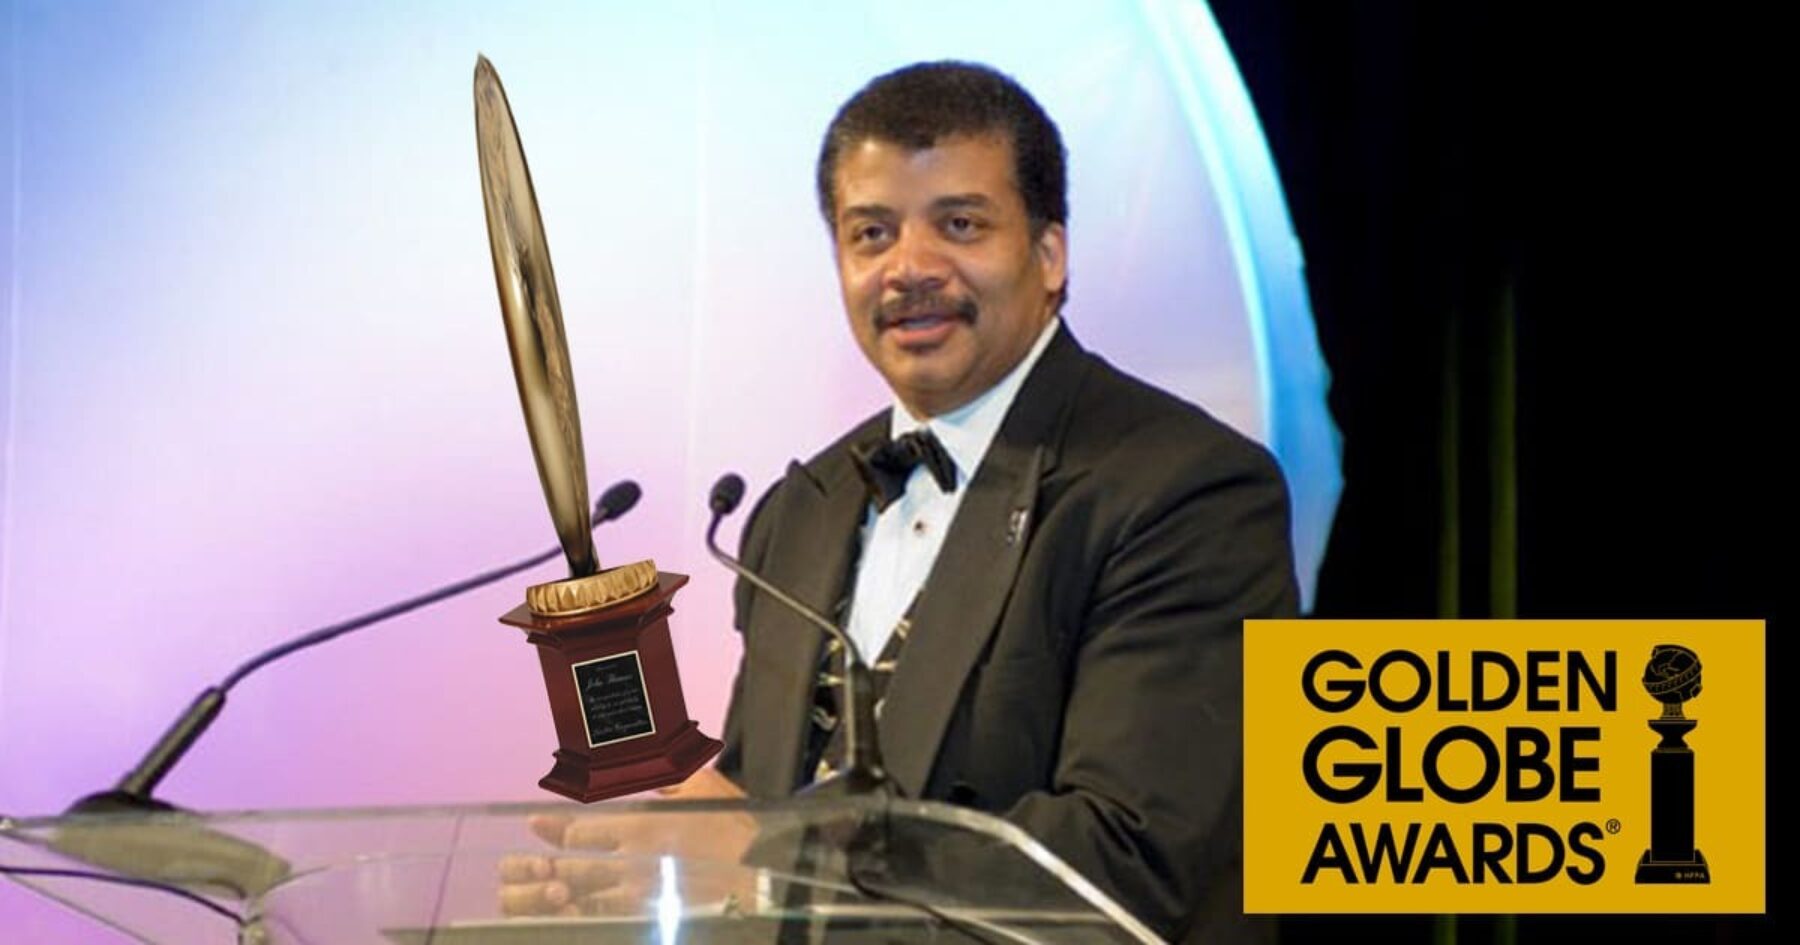 Neil deGrasse Tyson Receives Golden Flat Earth Award